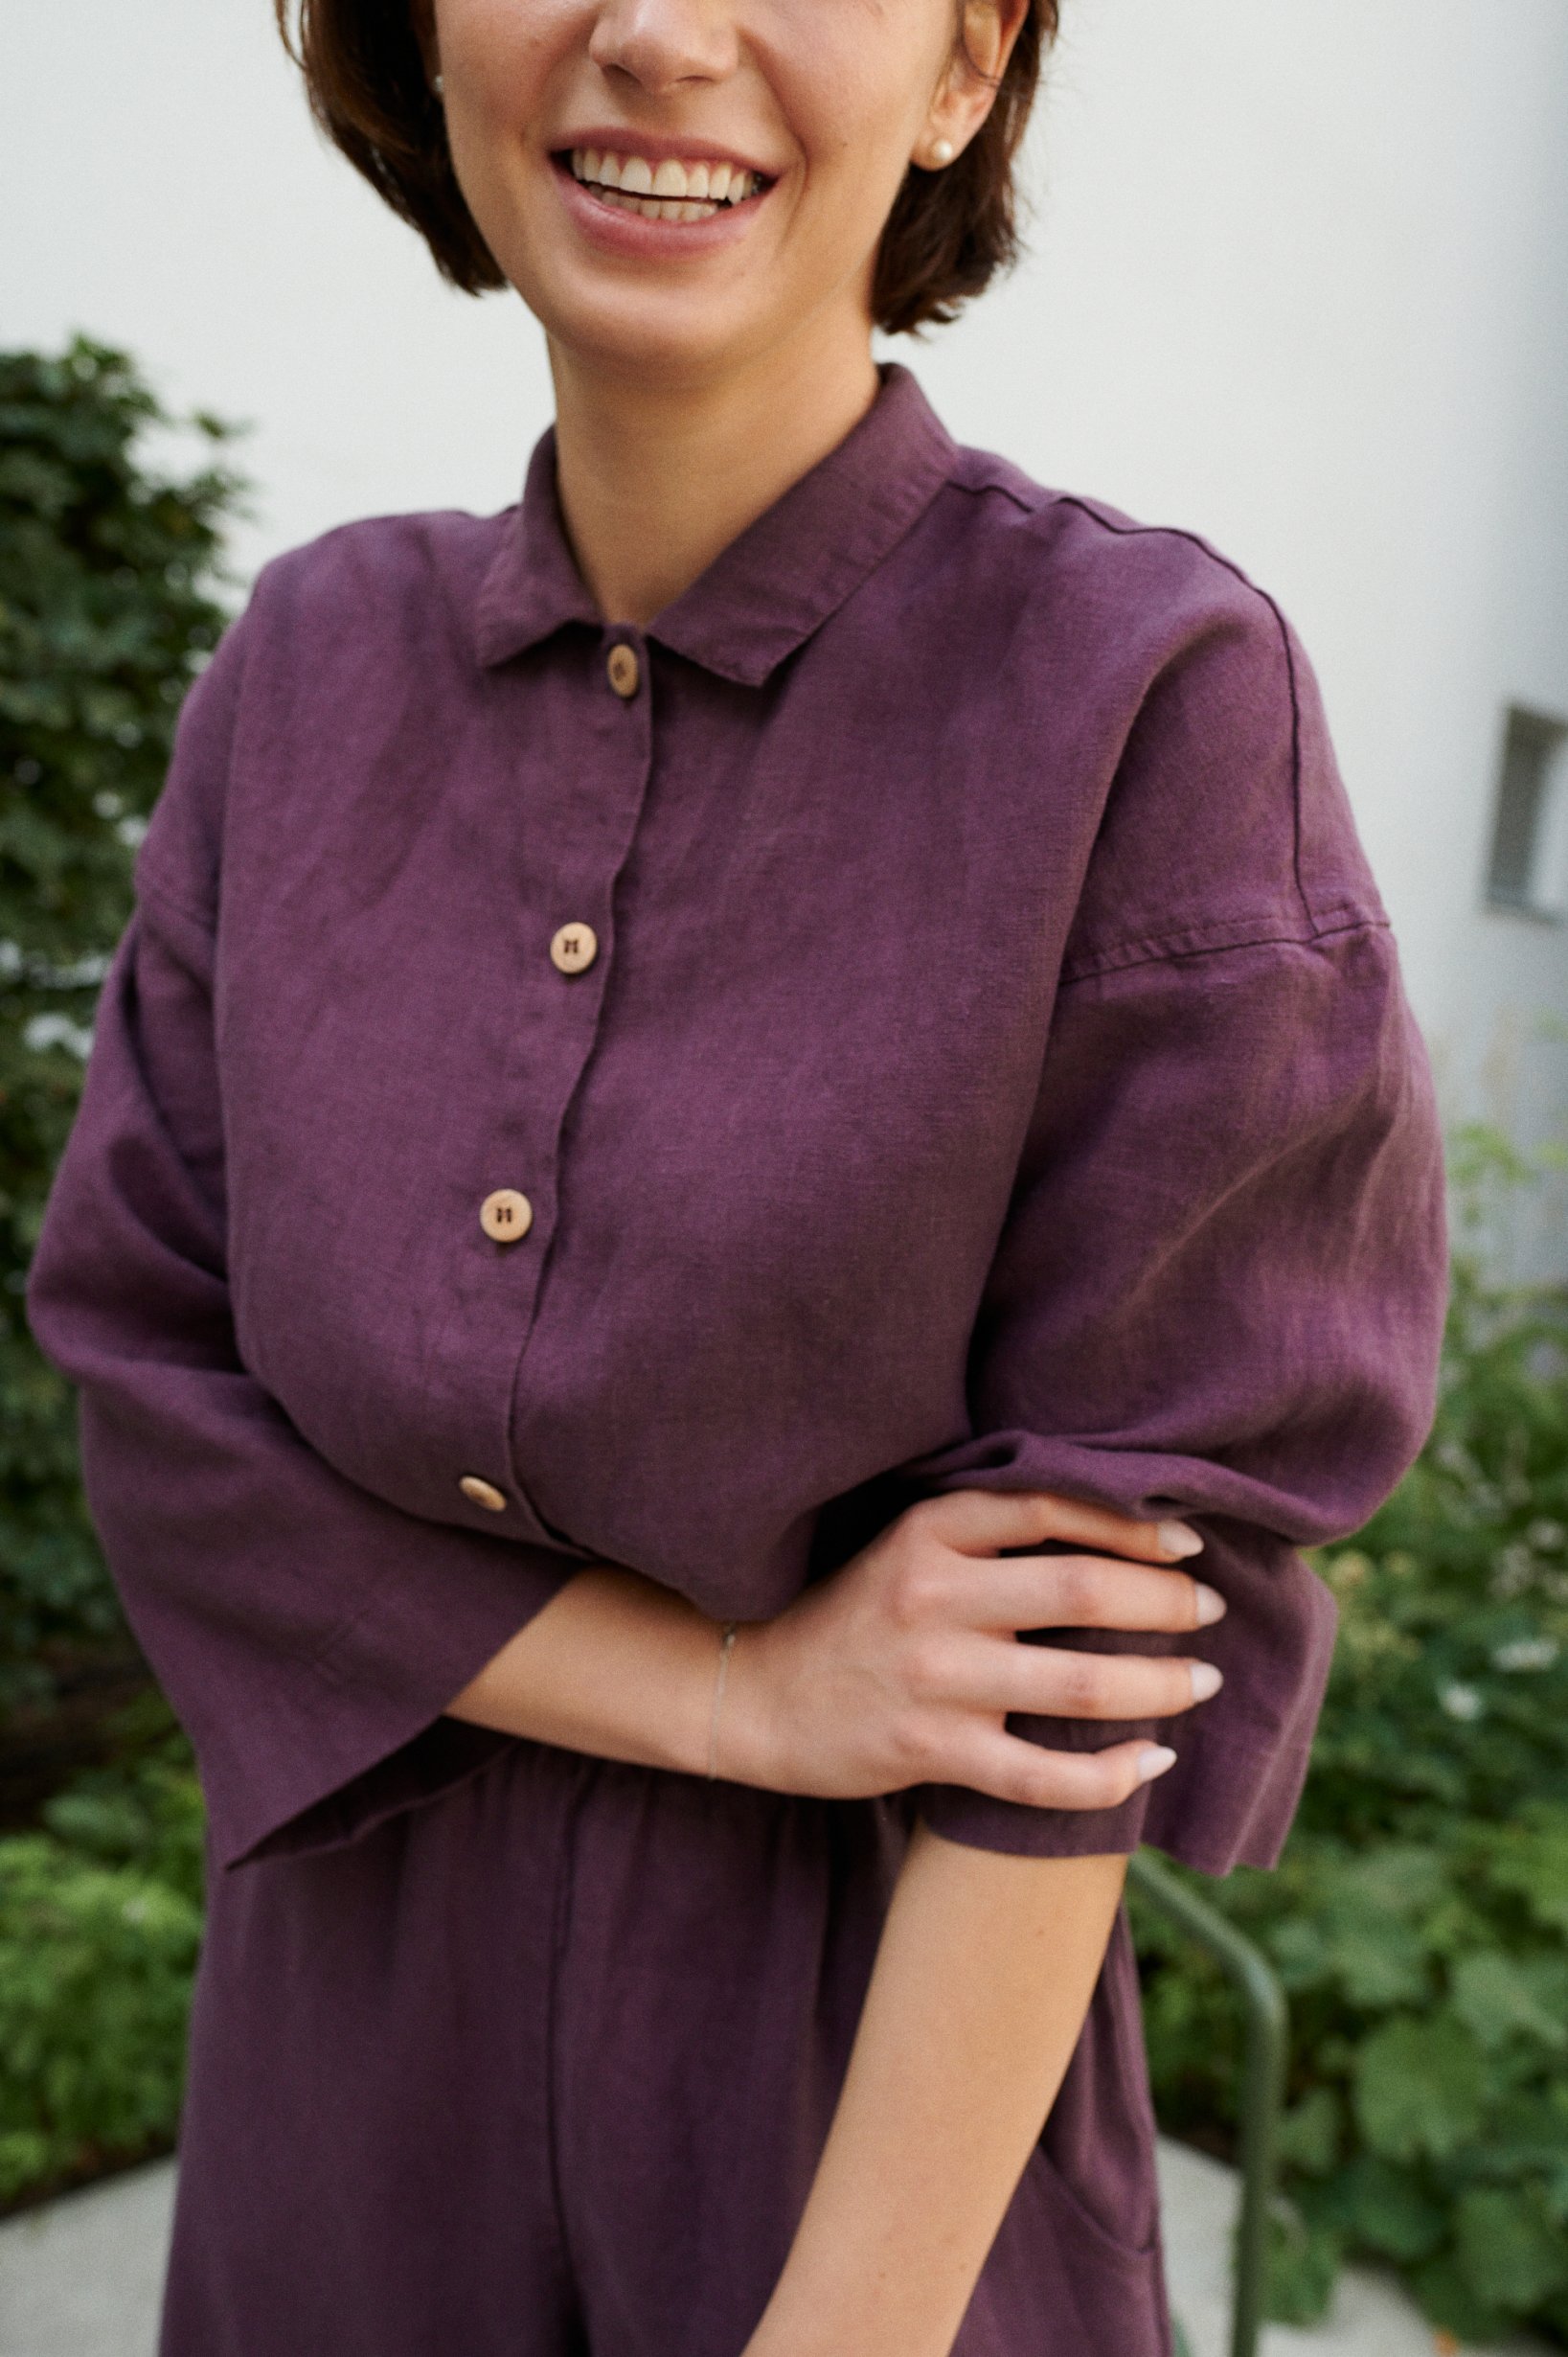 A button-down linen jumpsuit with a dress shirt collar and wooden buttons